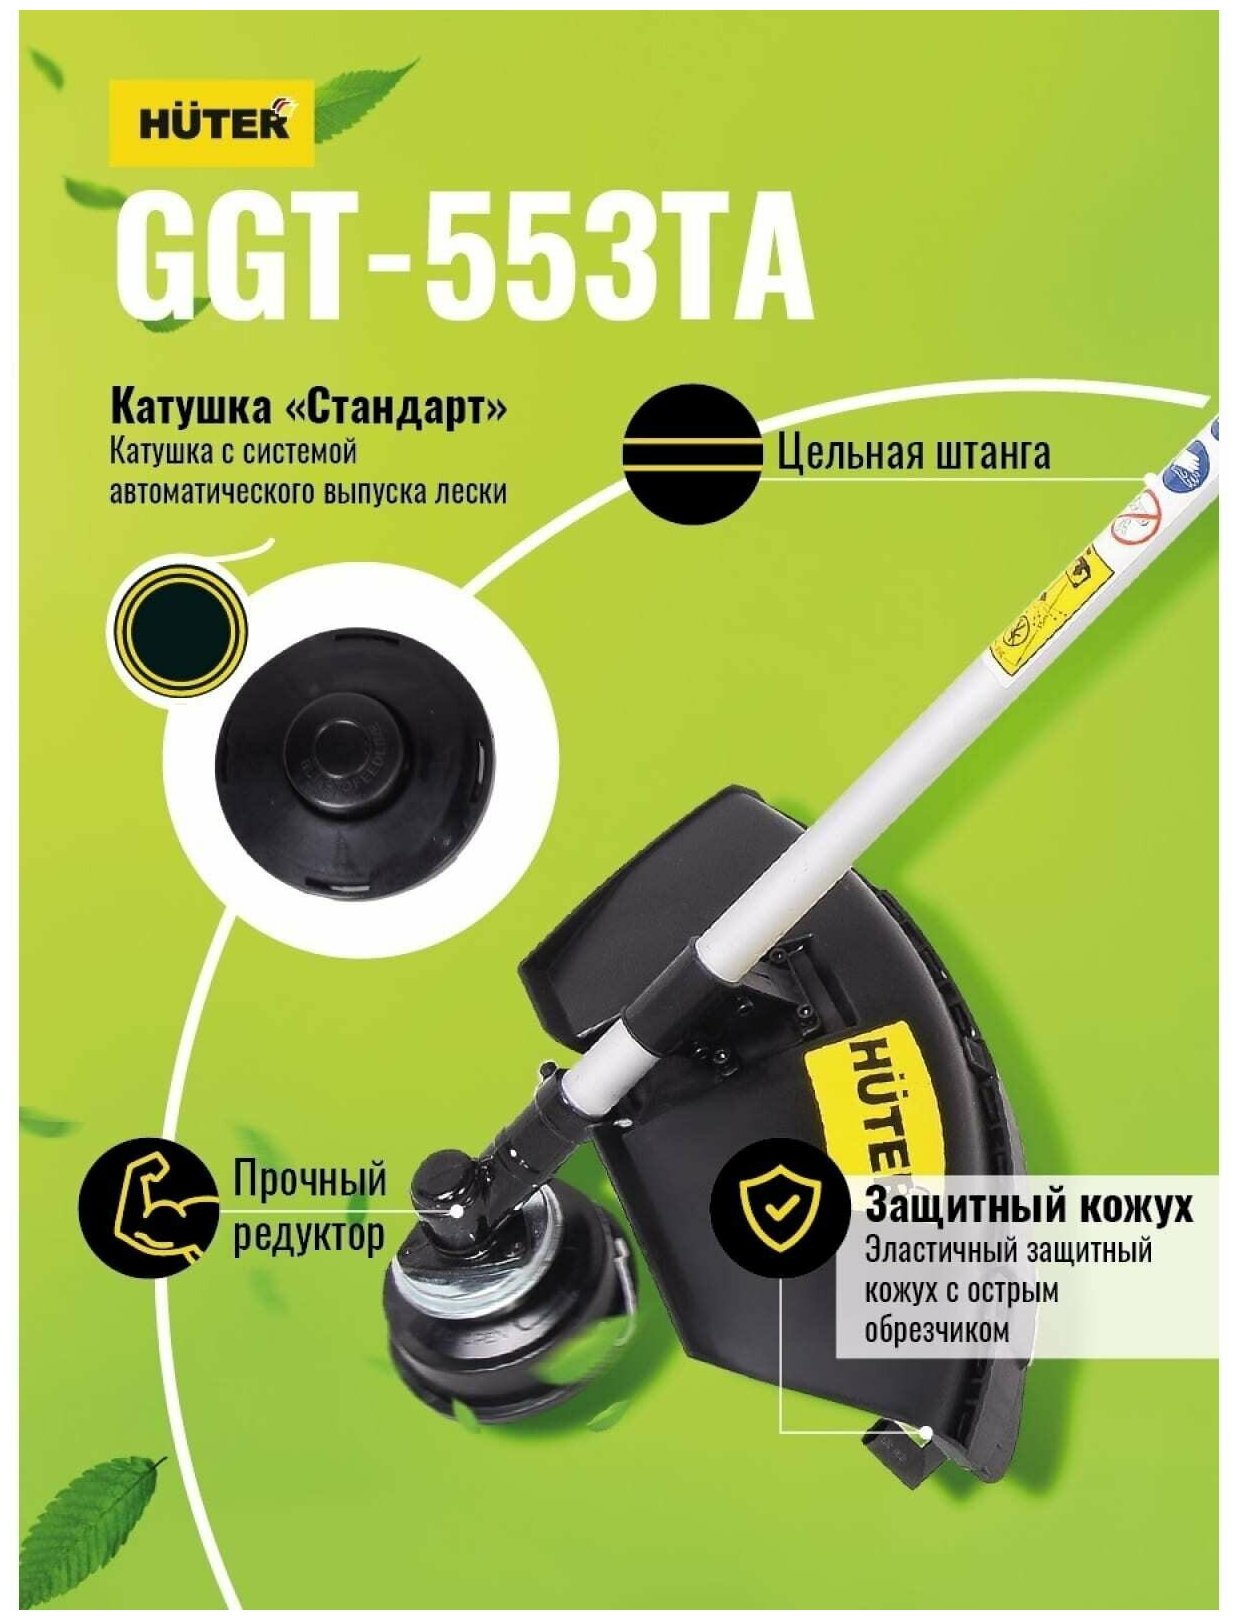 Бензиновый триммер Huter GGT-553TA